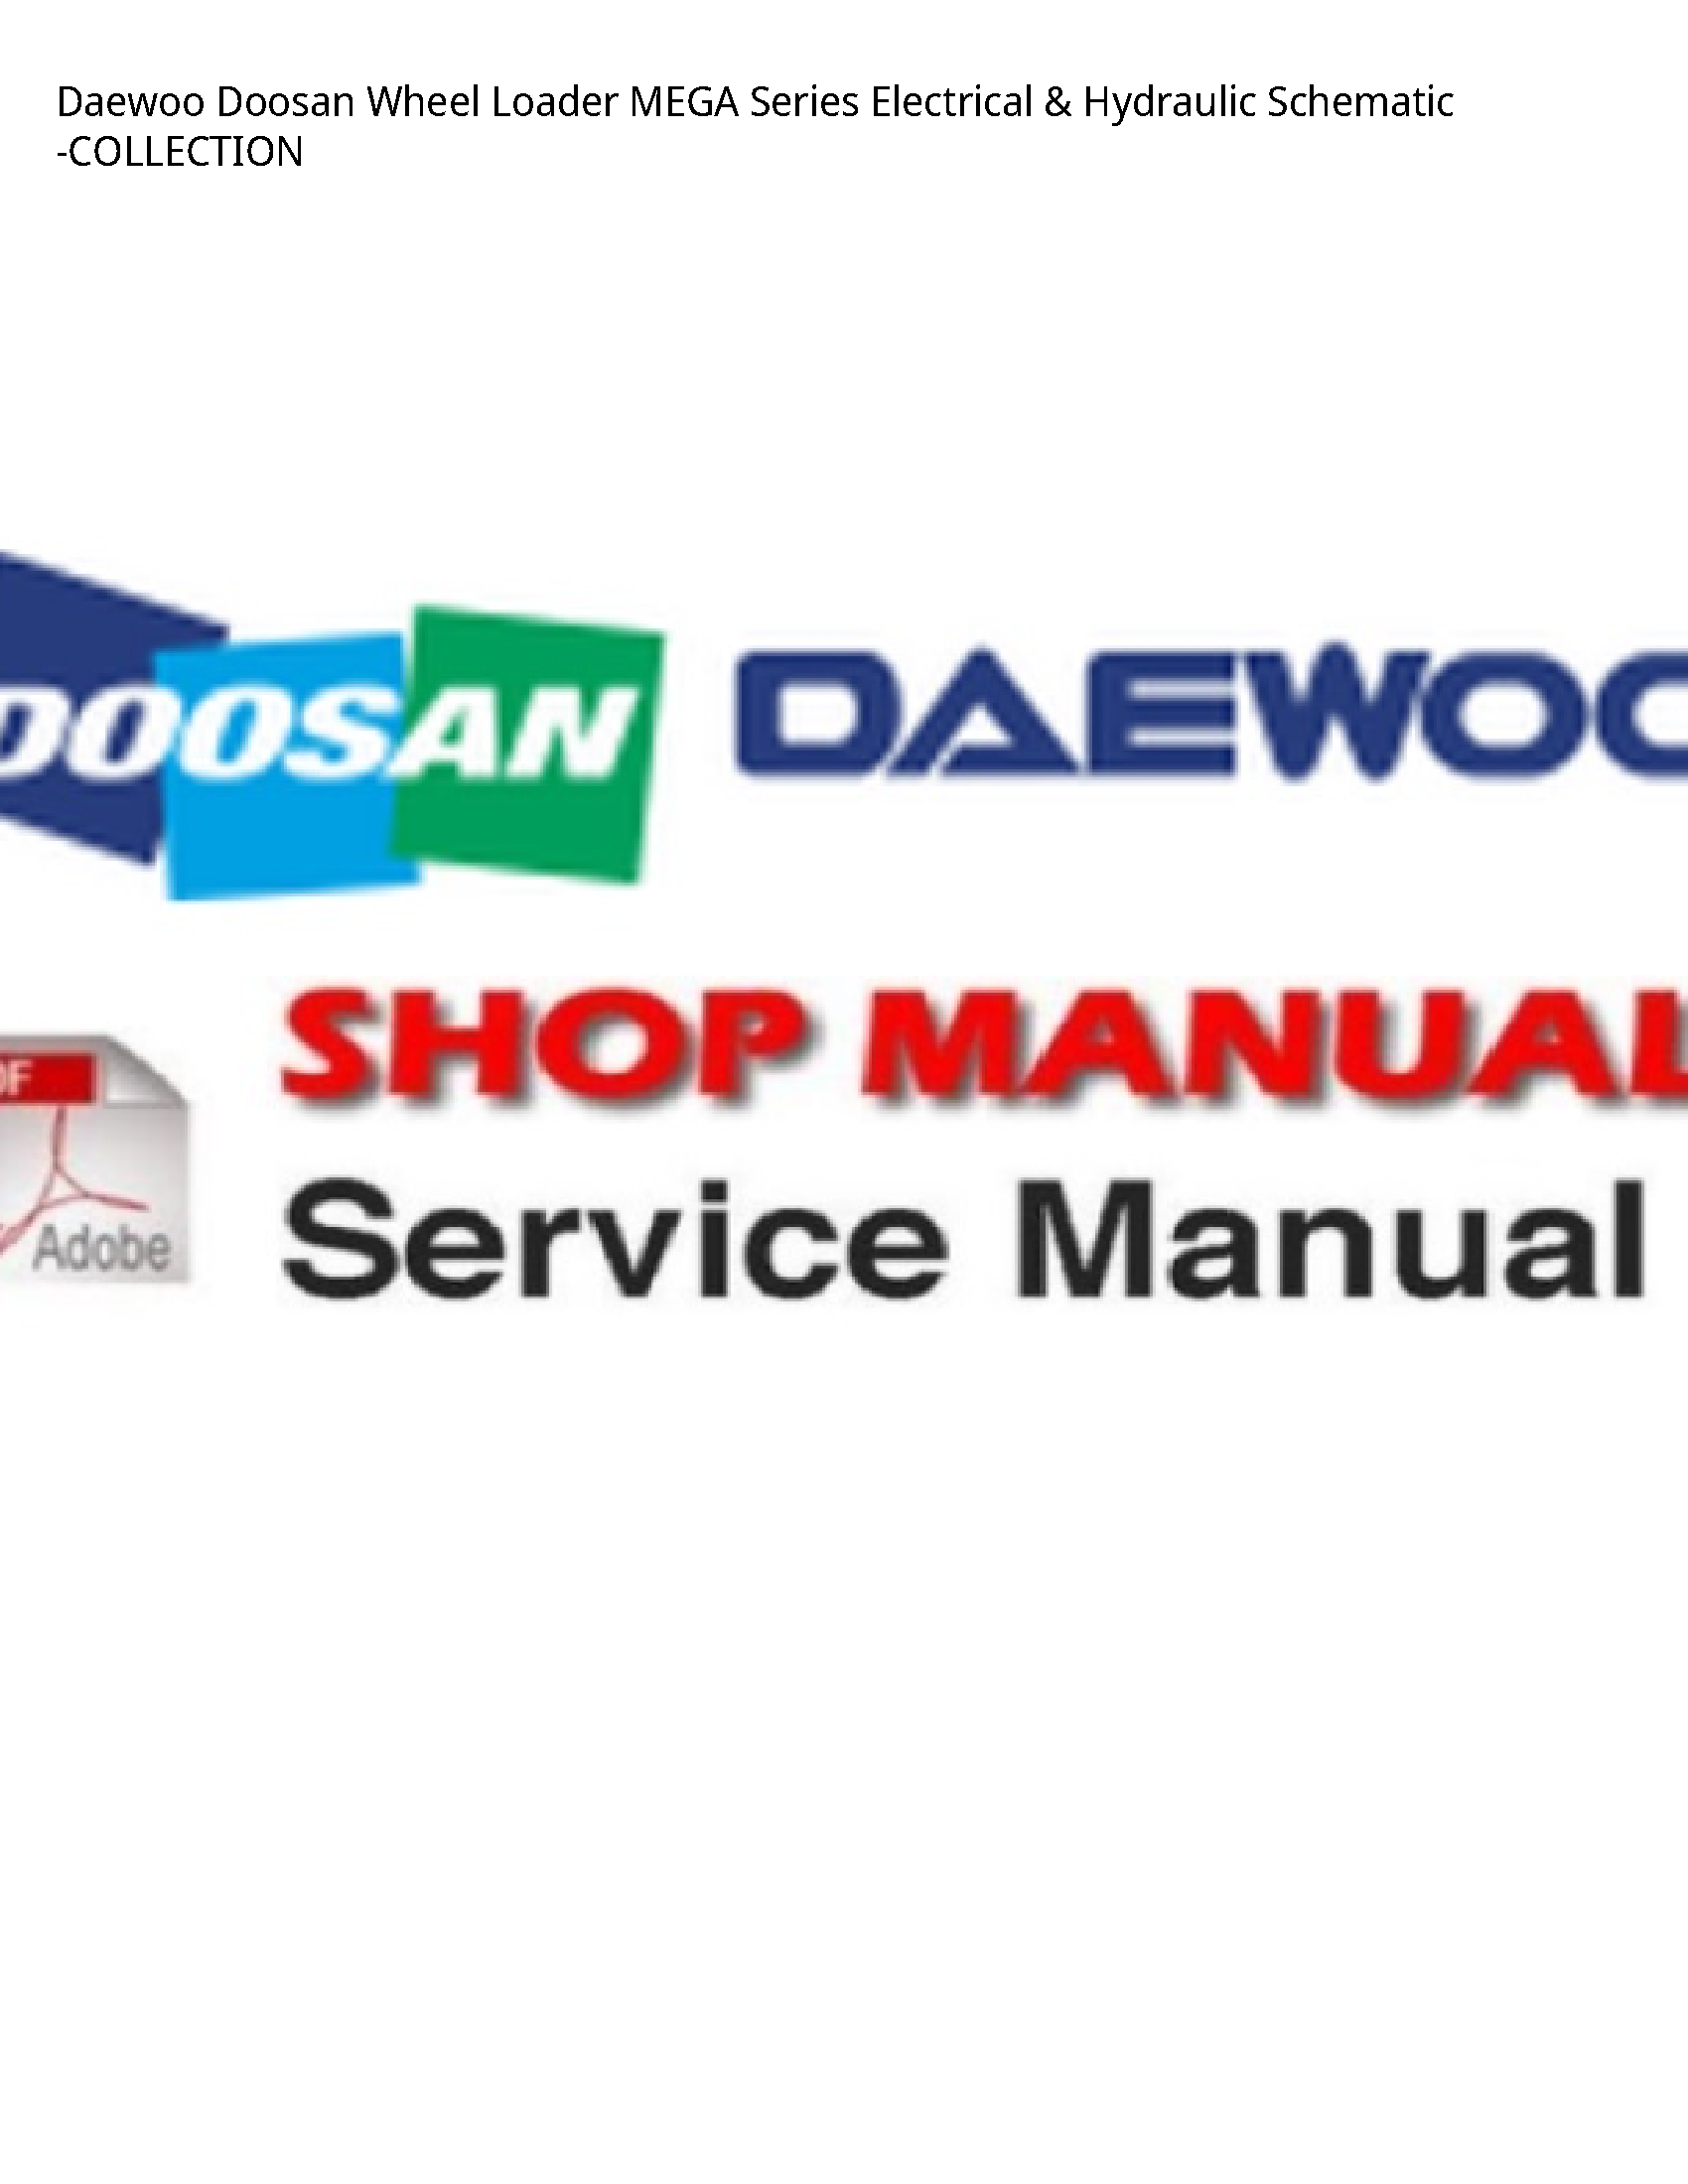 Daewoo Doosan Wheel Loader MEGA Series Electrical Hydraulic Schematic -COLLECTION manual